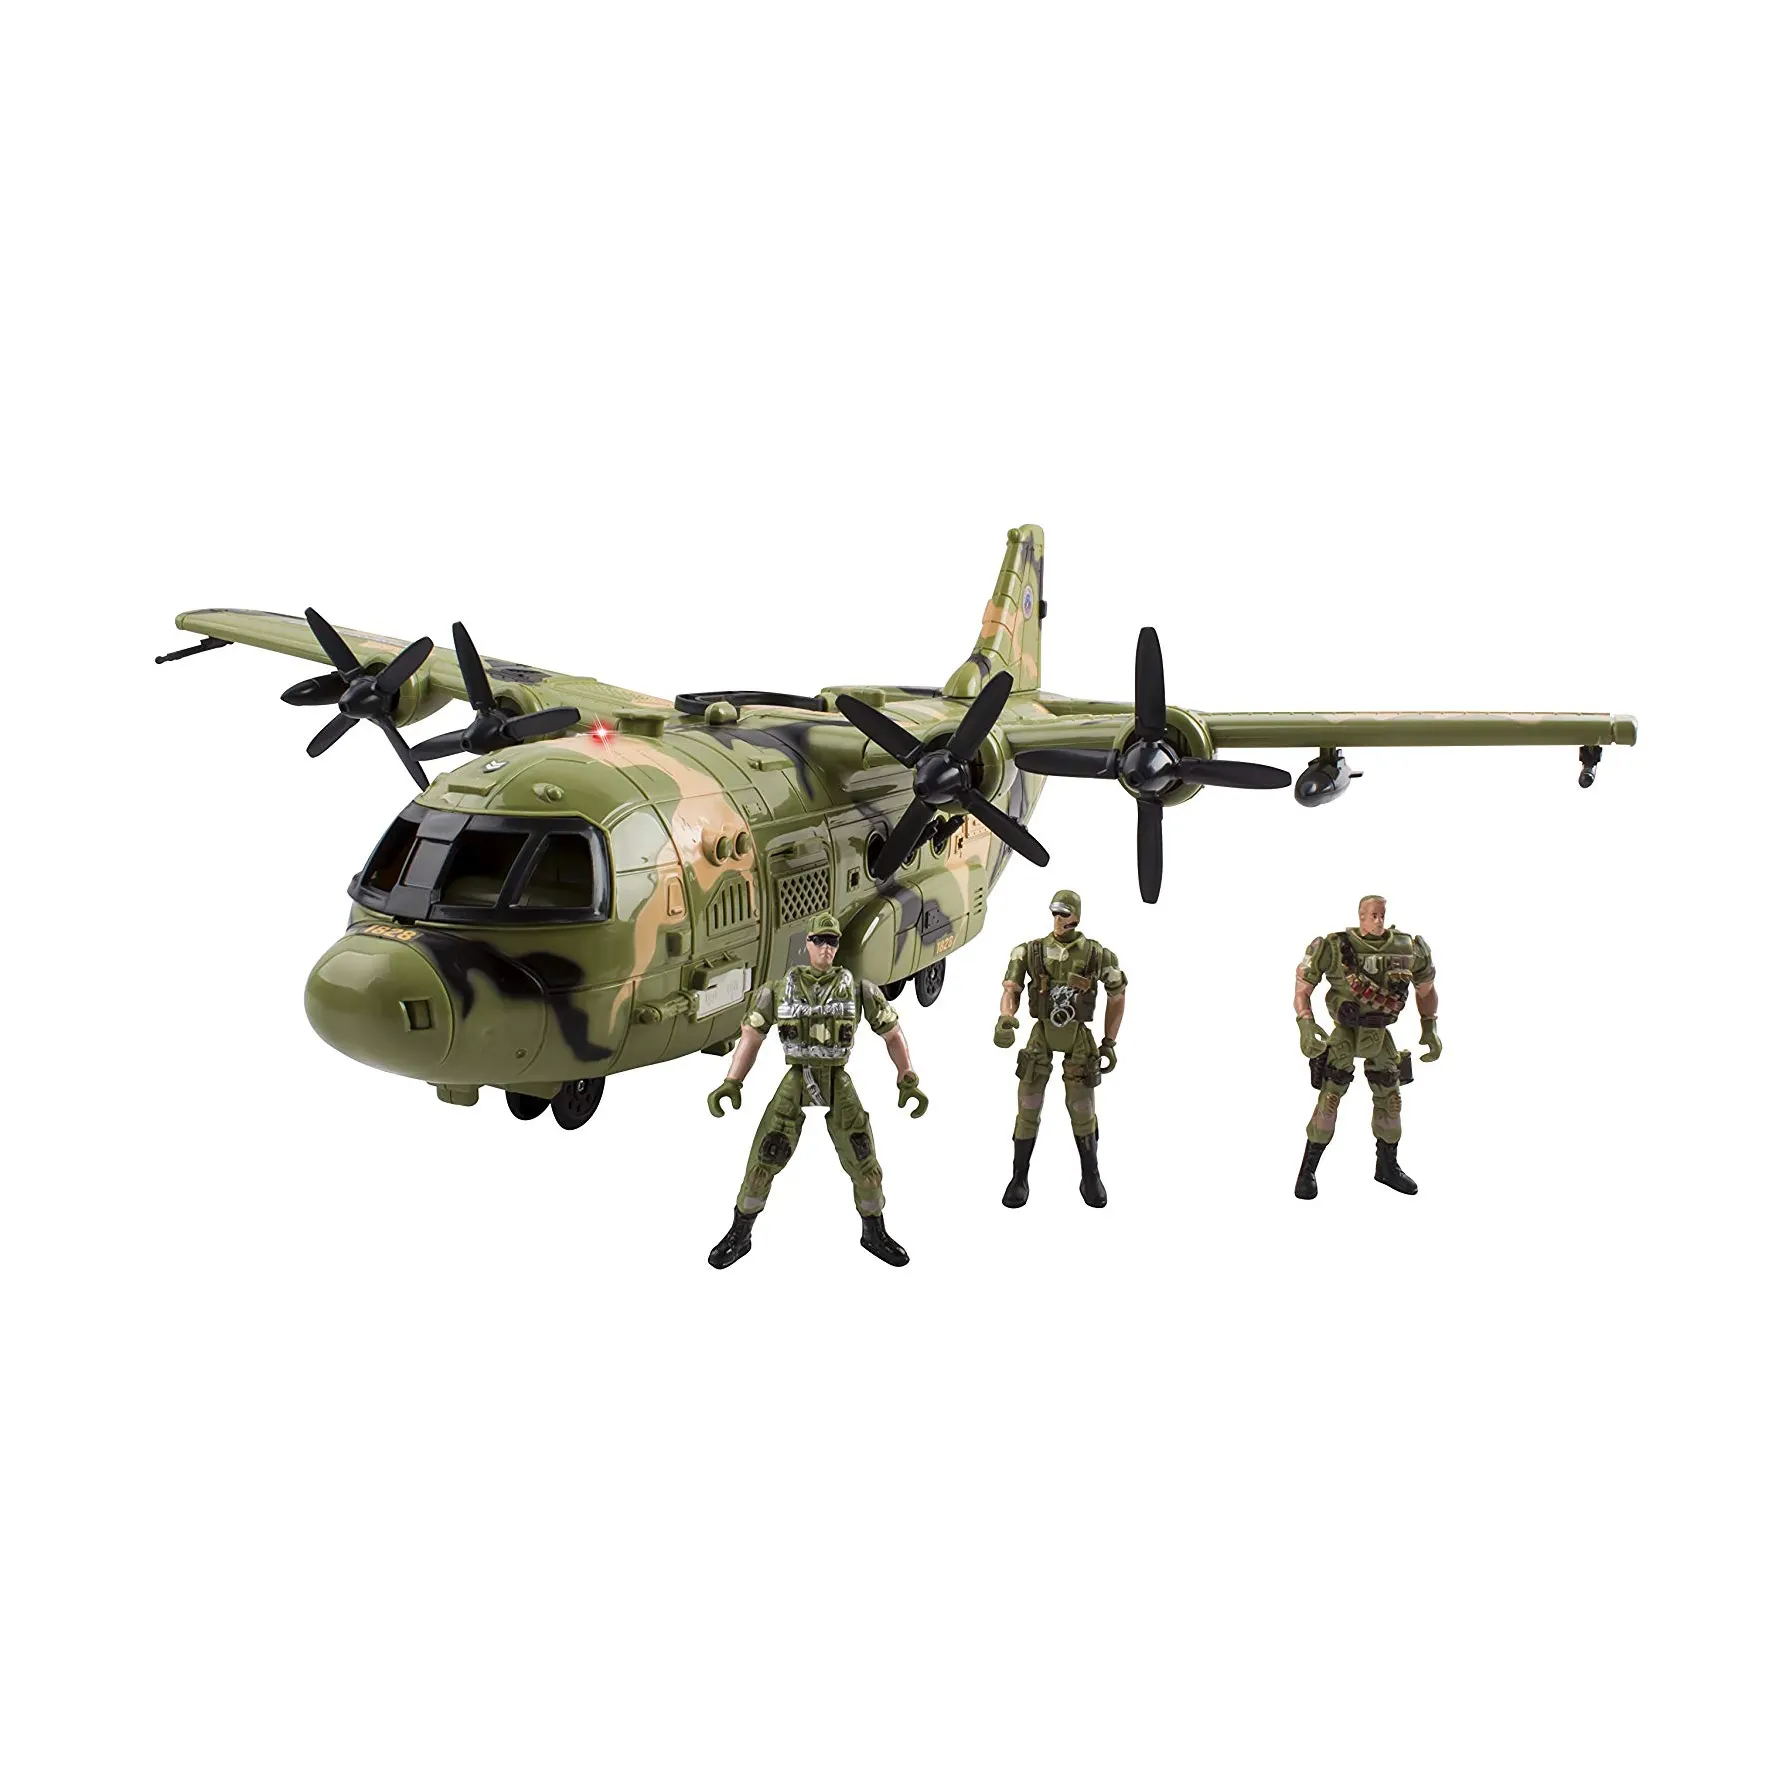 Mainan Pesawat Bomber Raksasa F16, Mainan Pesawat Tempur Militer Airforce dengan Lampu dan Suara Tentara untuk Anak-anak, dengan Tentara Mini